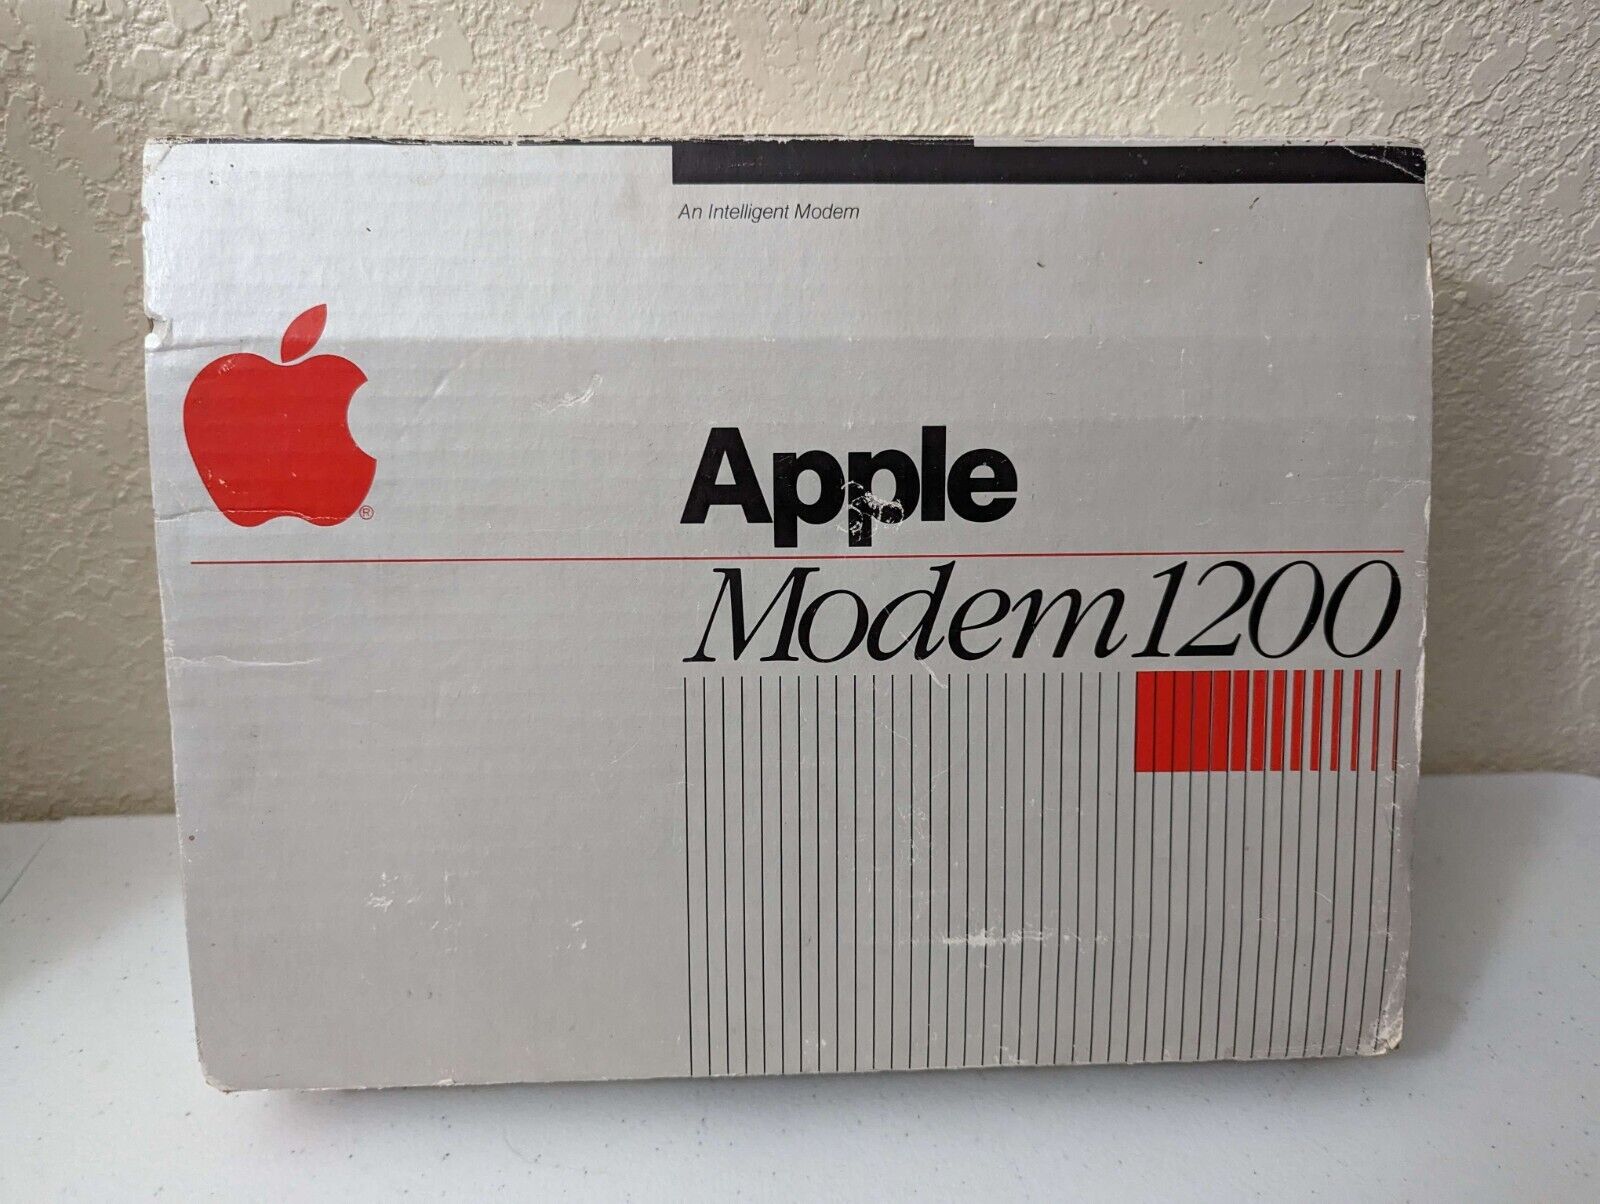 Vintage Modem: Used Apple Modem 1200 (A9M0301) Powers On